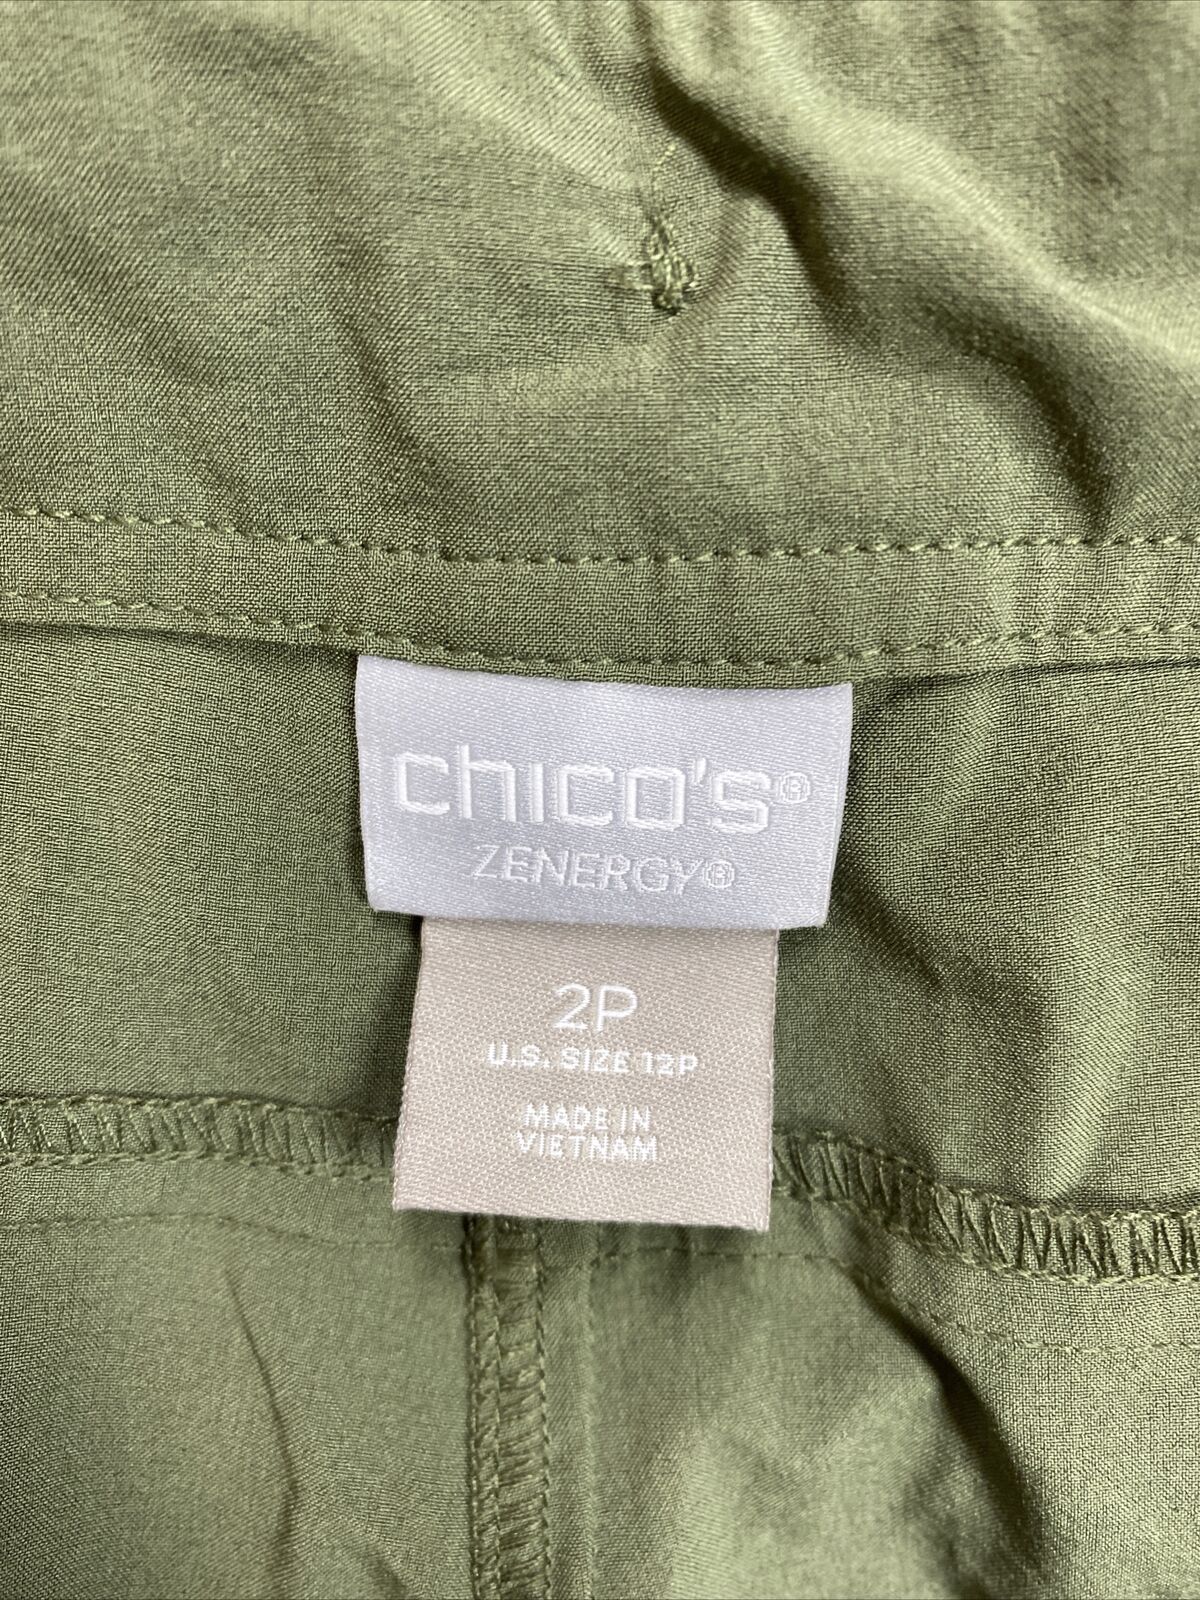 Chico's Women's Dark Green Drawstring Cargo Capri Pants - Petite 2/US 12P